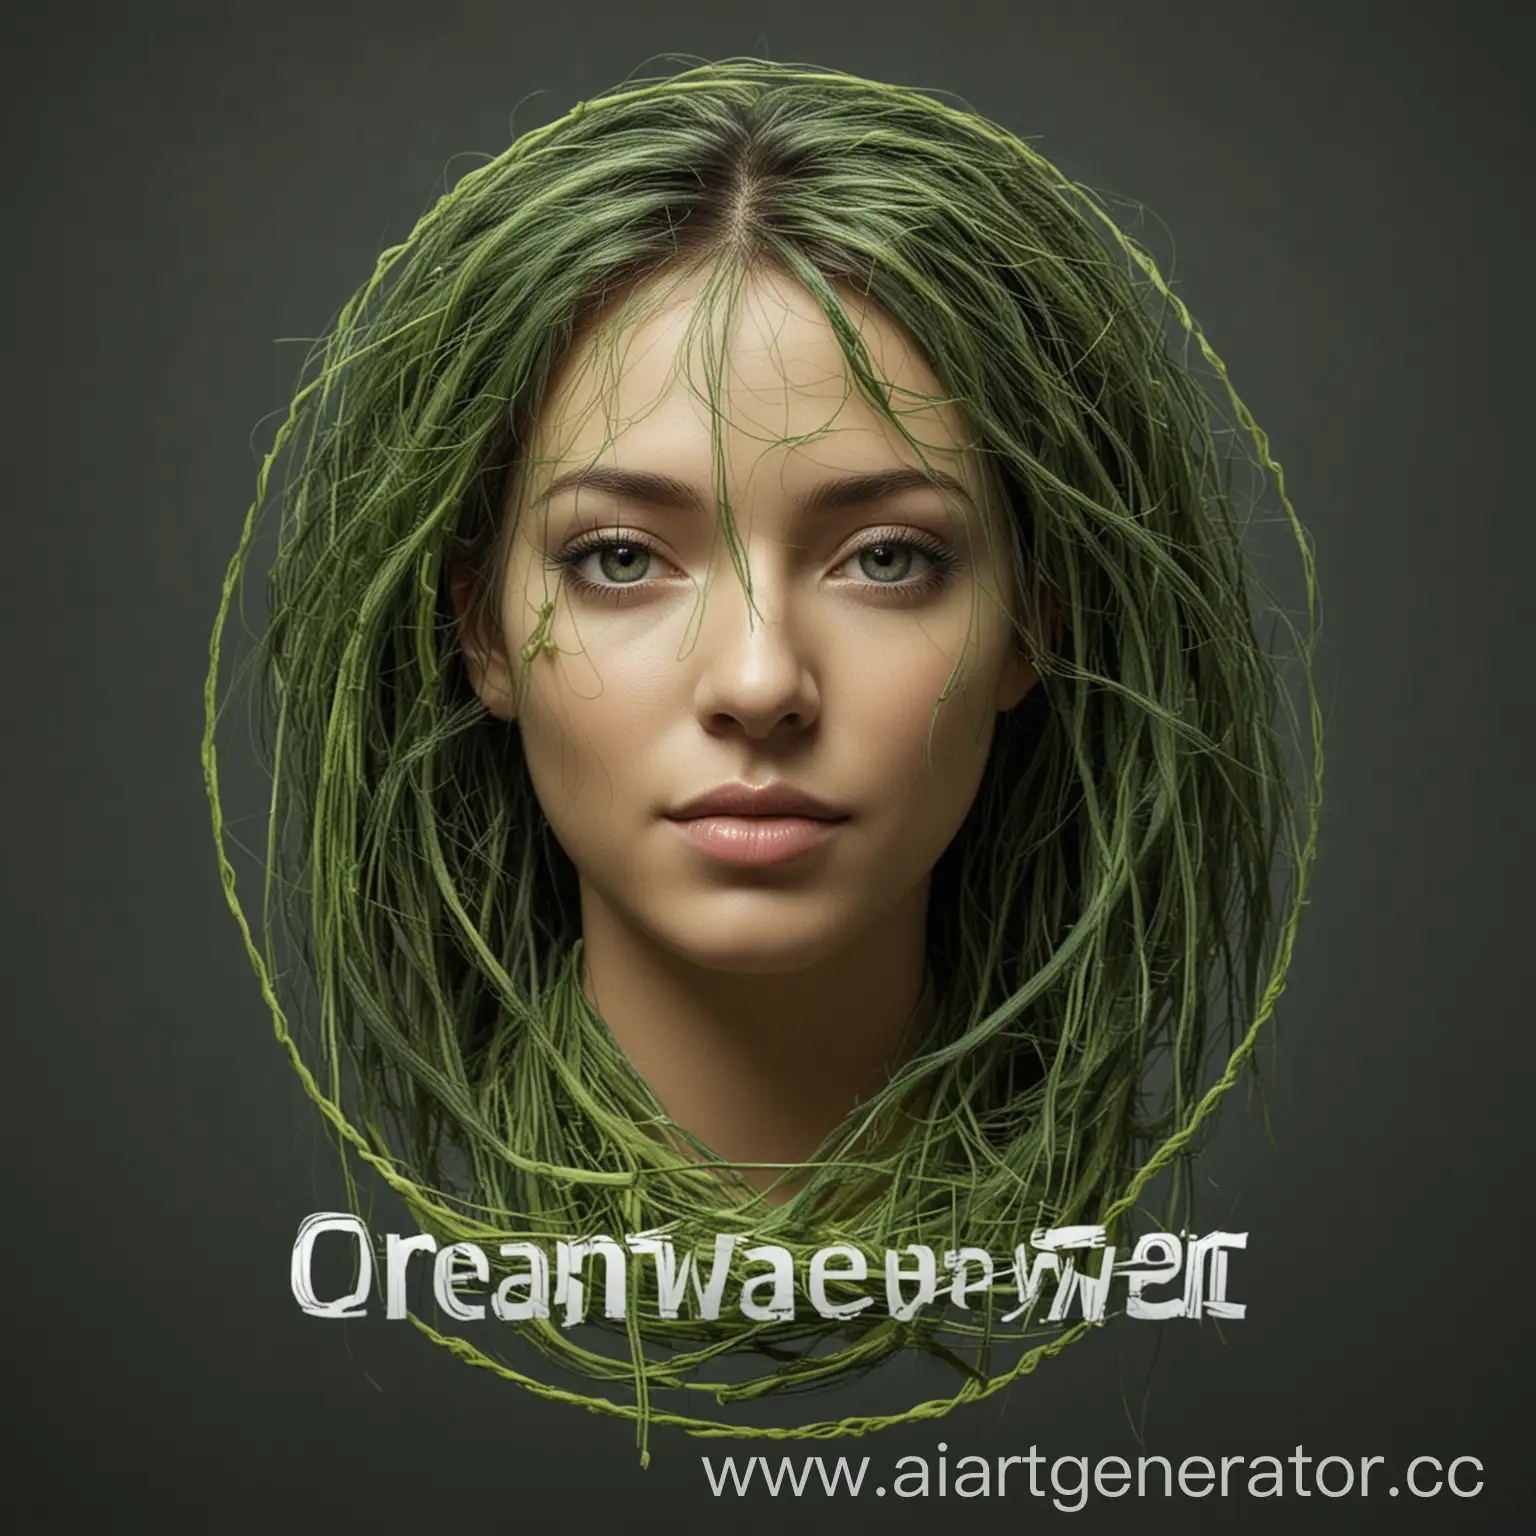 DreamWeaver - Image Generation API